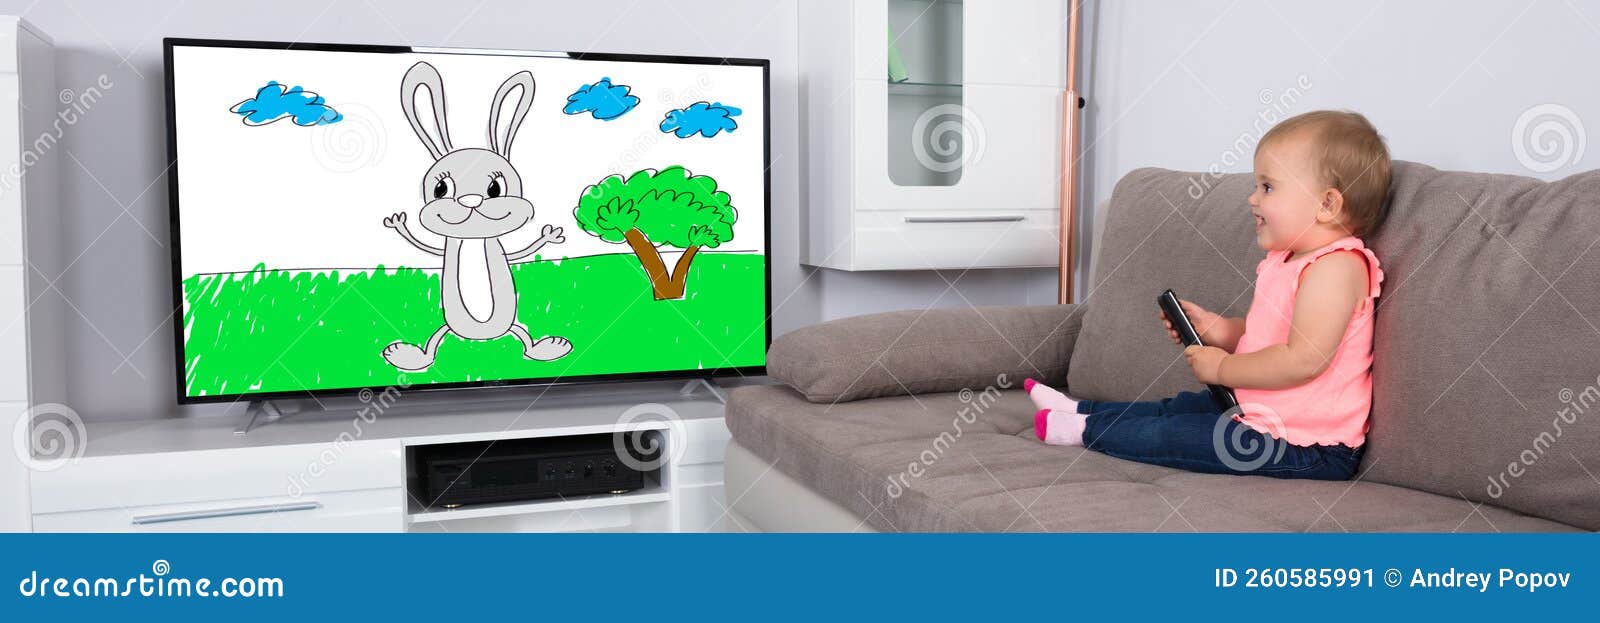 Baby Watching Tv Cartoon Stock Image Image Of Film 260585991